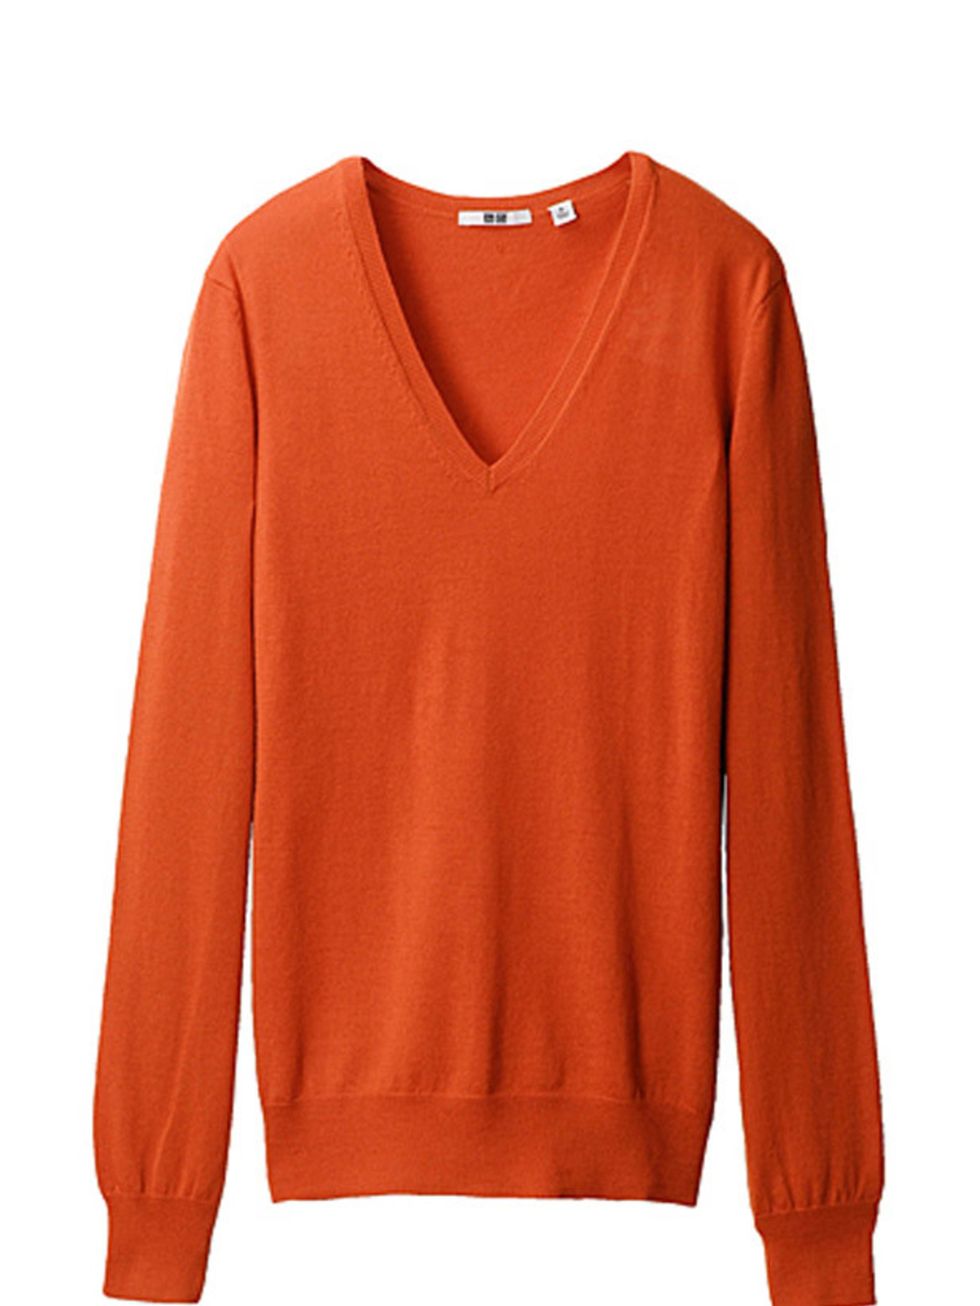 <p><a href="http://shop.uniqlo.com/uk/list/basic/women/knitwear/extrafinemerino">Uniqlo</a> orange V neck sweater, £24.90</p>